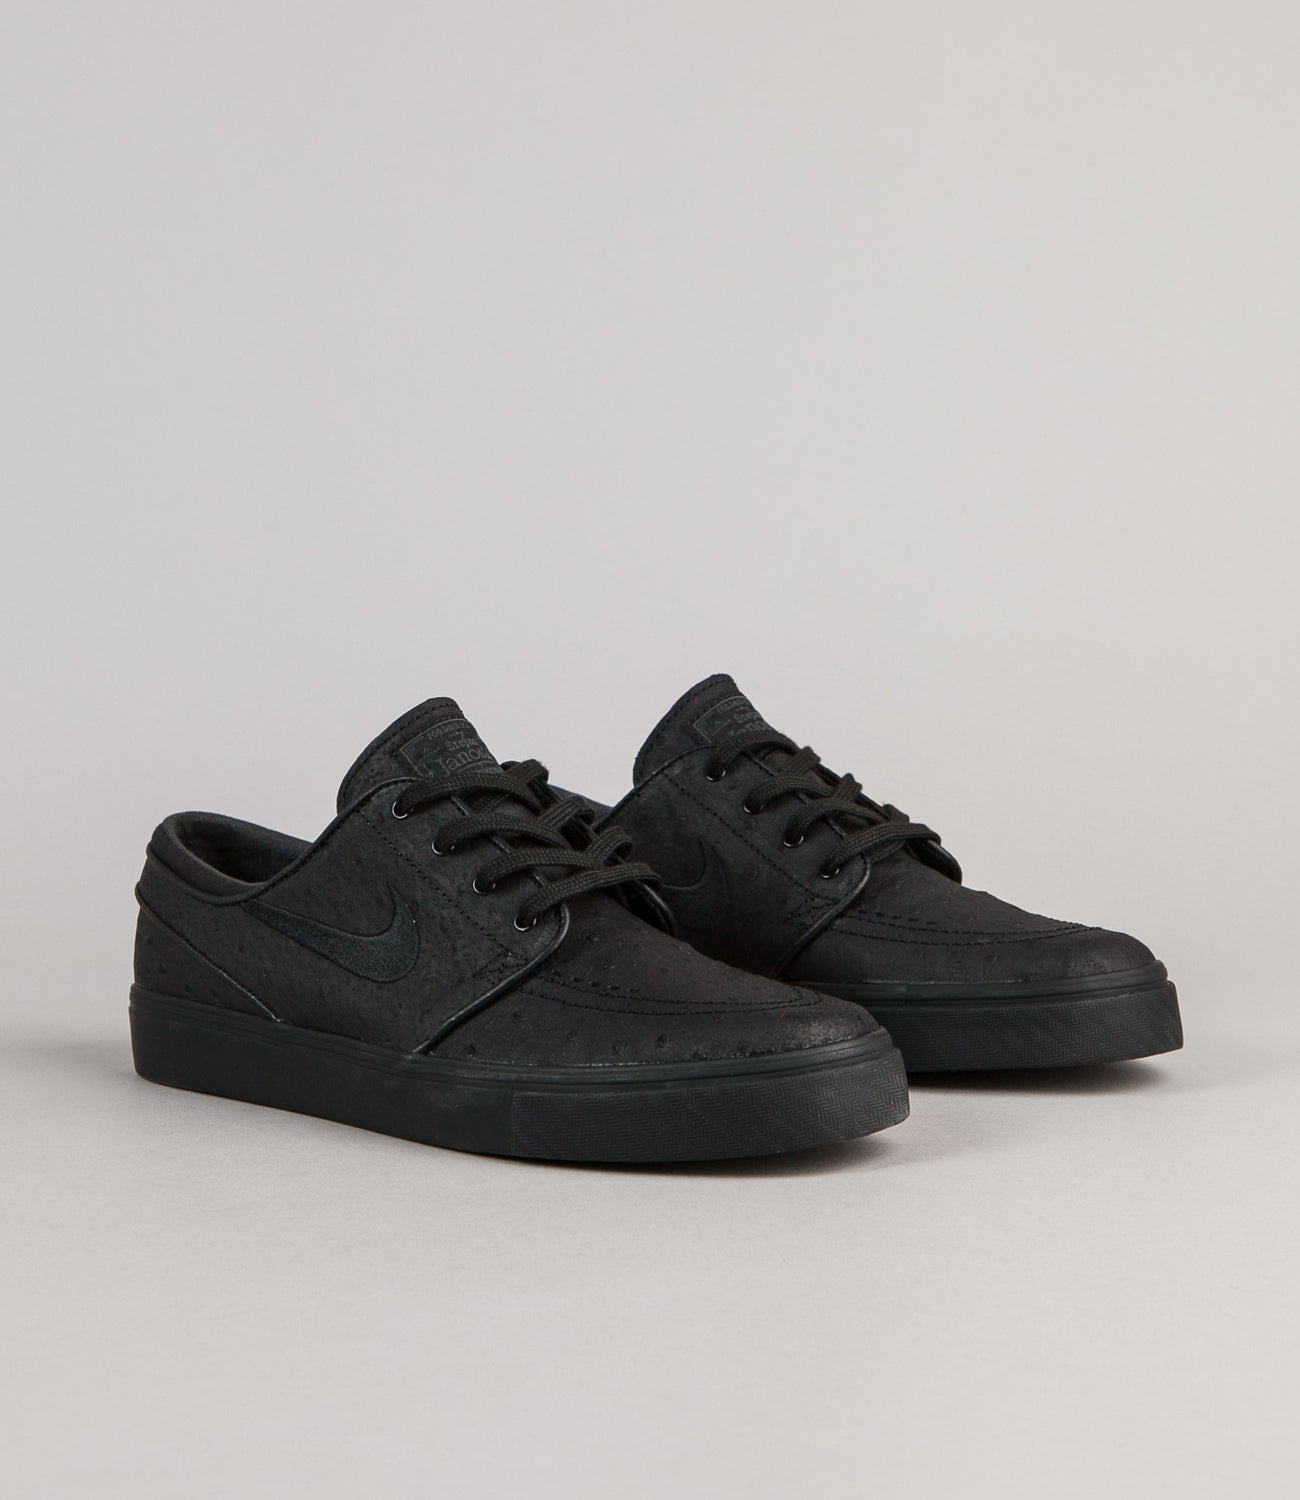 Afstoten Me maat Nike SB Stefan Janoski Leather Shoes - Black / Black - Anthracite | Flatspot